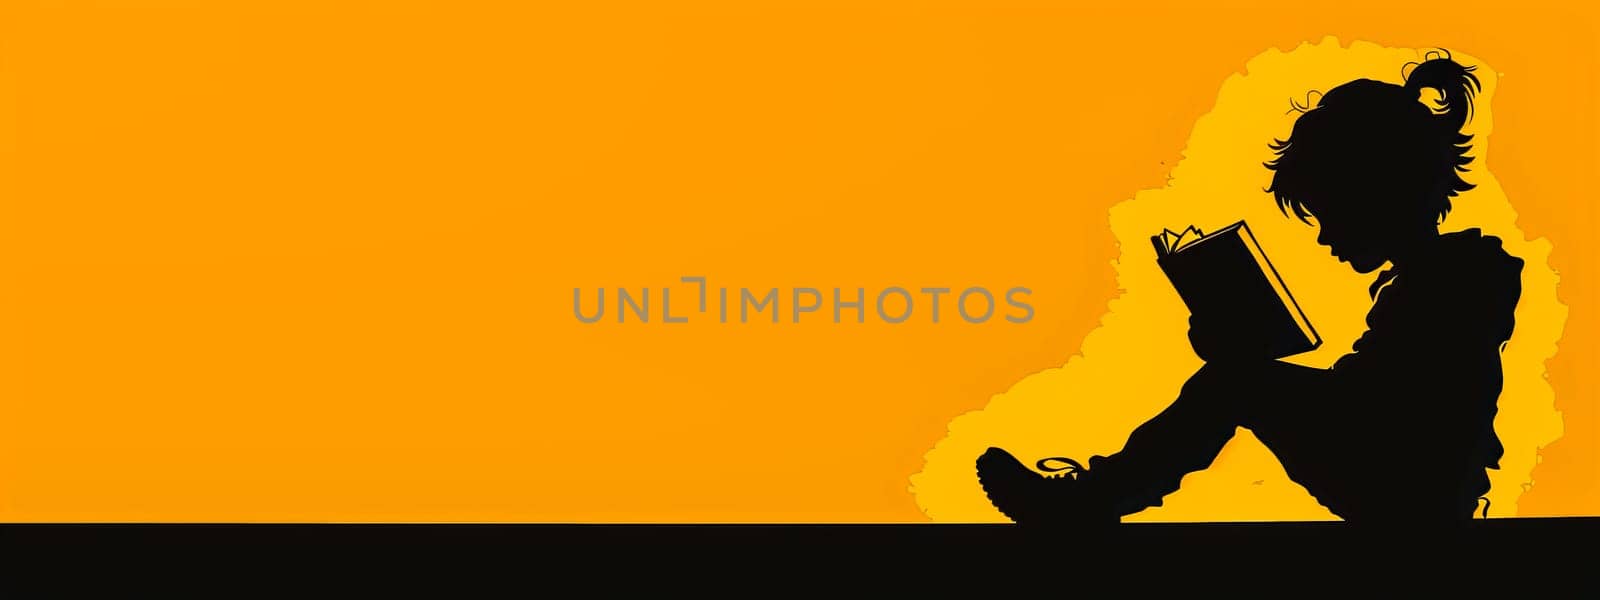 Child reading silhouette against orange background by Edophoto